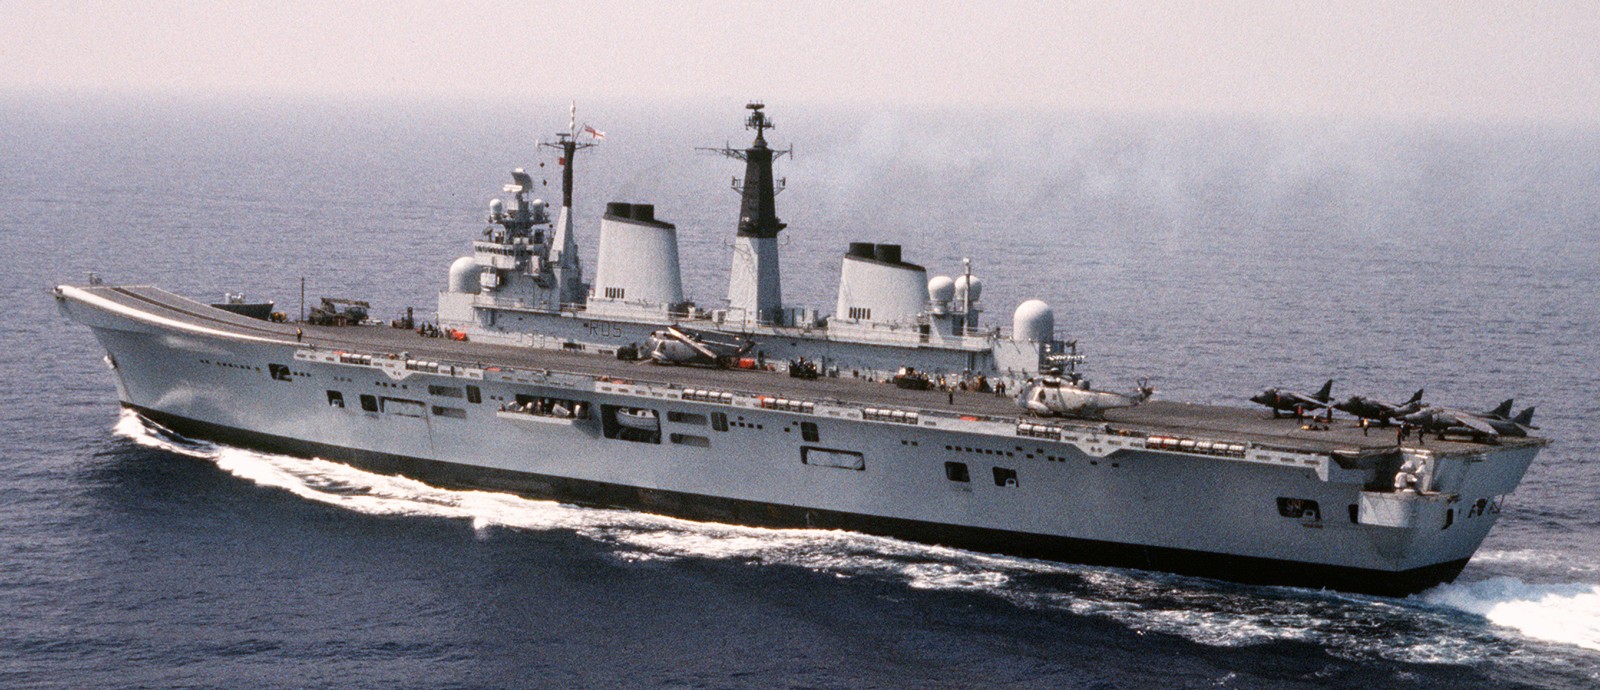 r-05 hms invincible class aircraft carrier royal navy 10